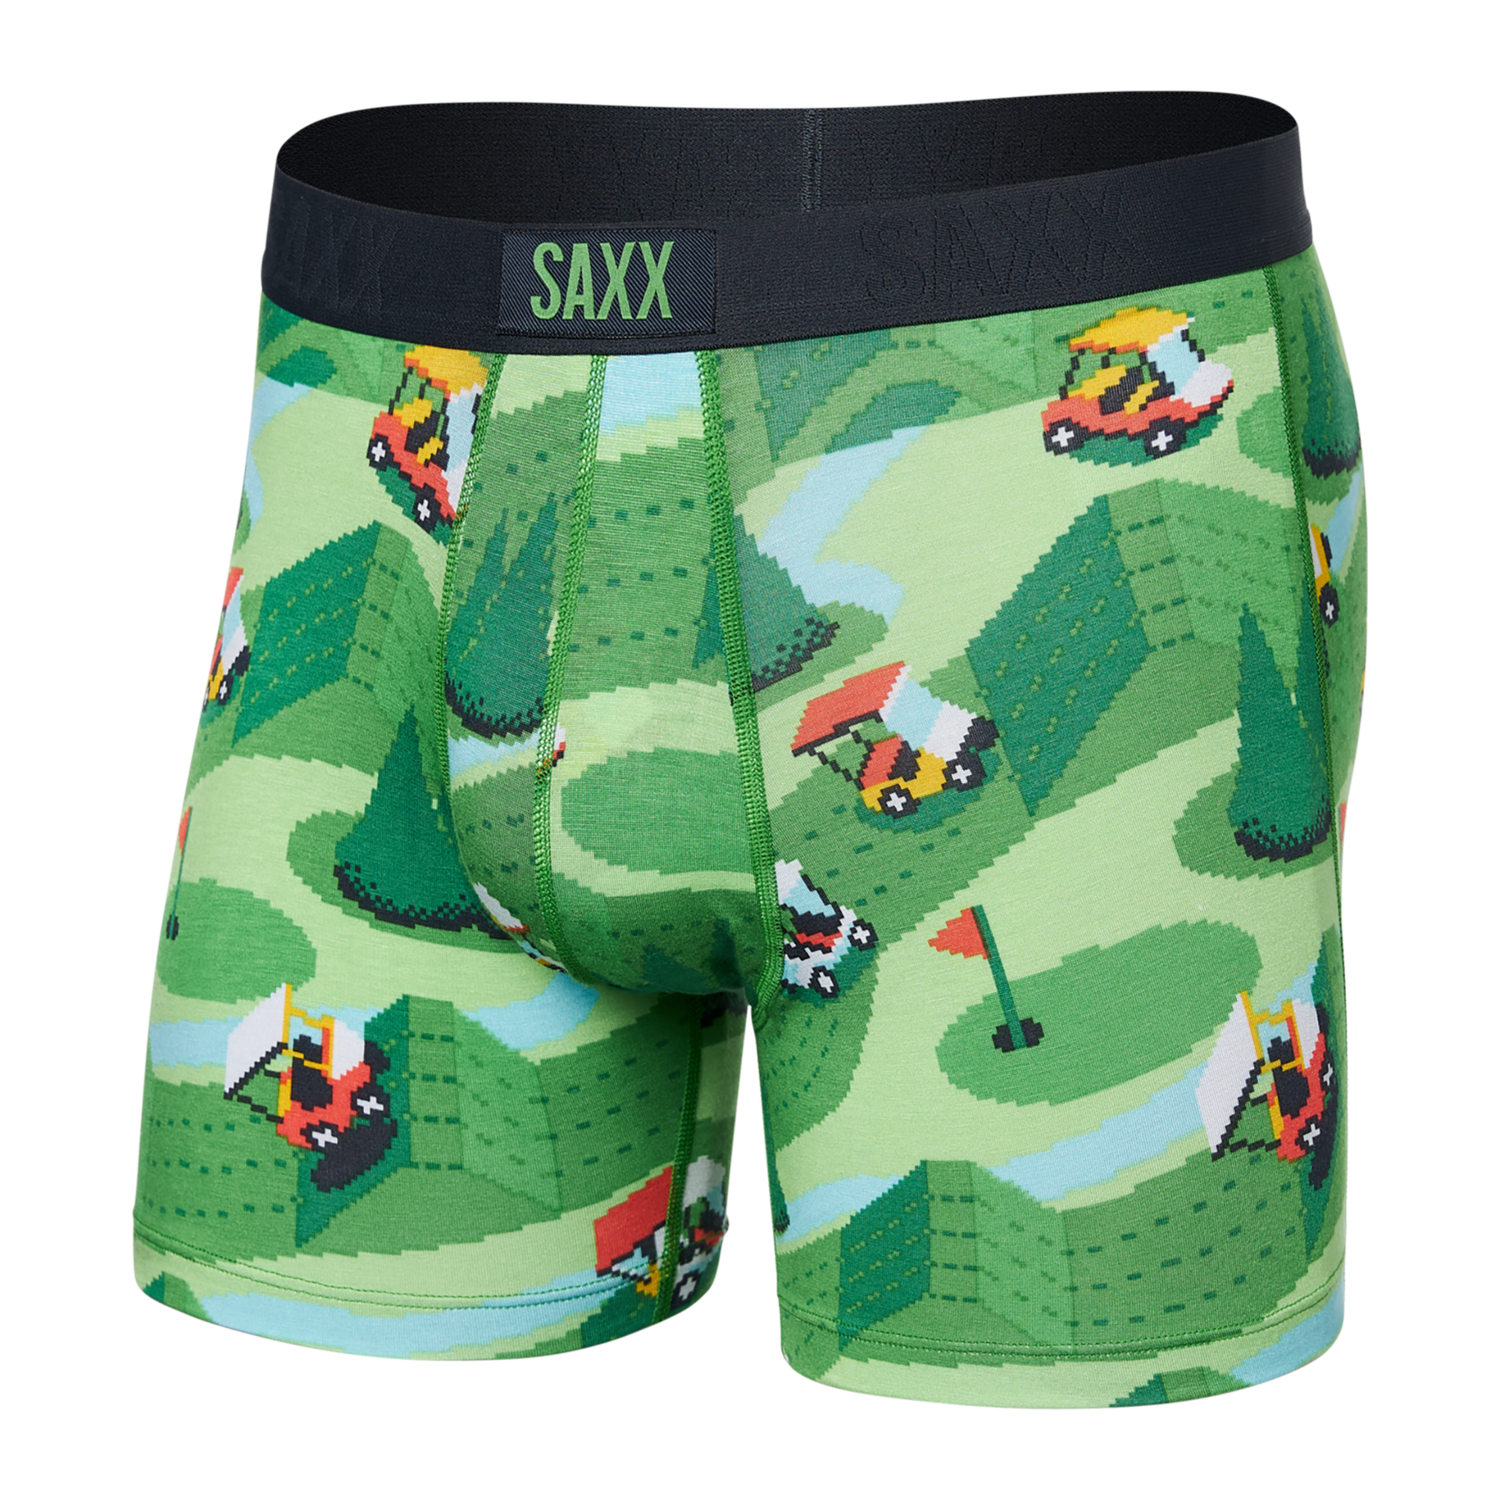 Vibe golf Print # SXBM35-ECG